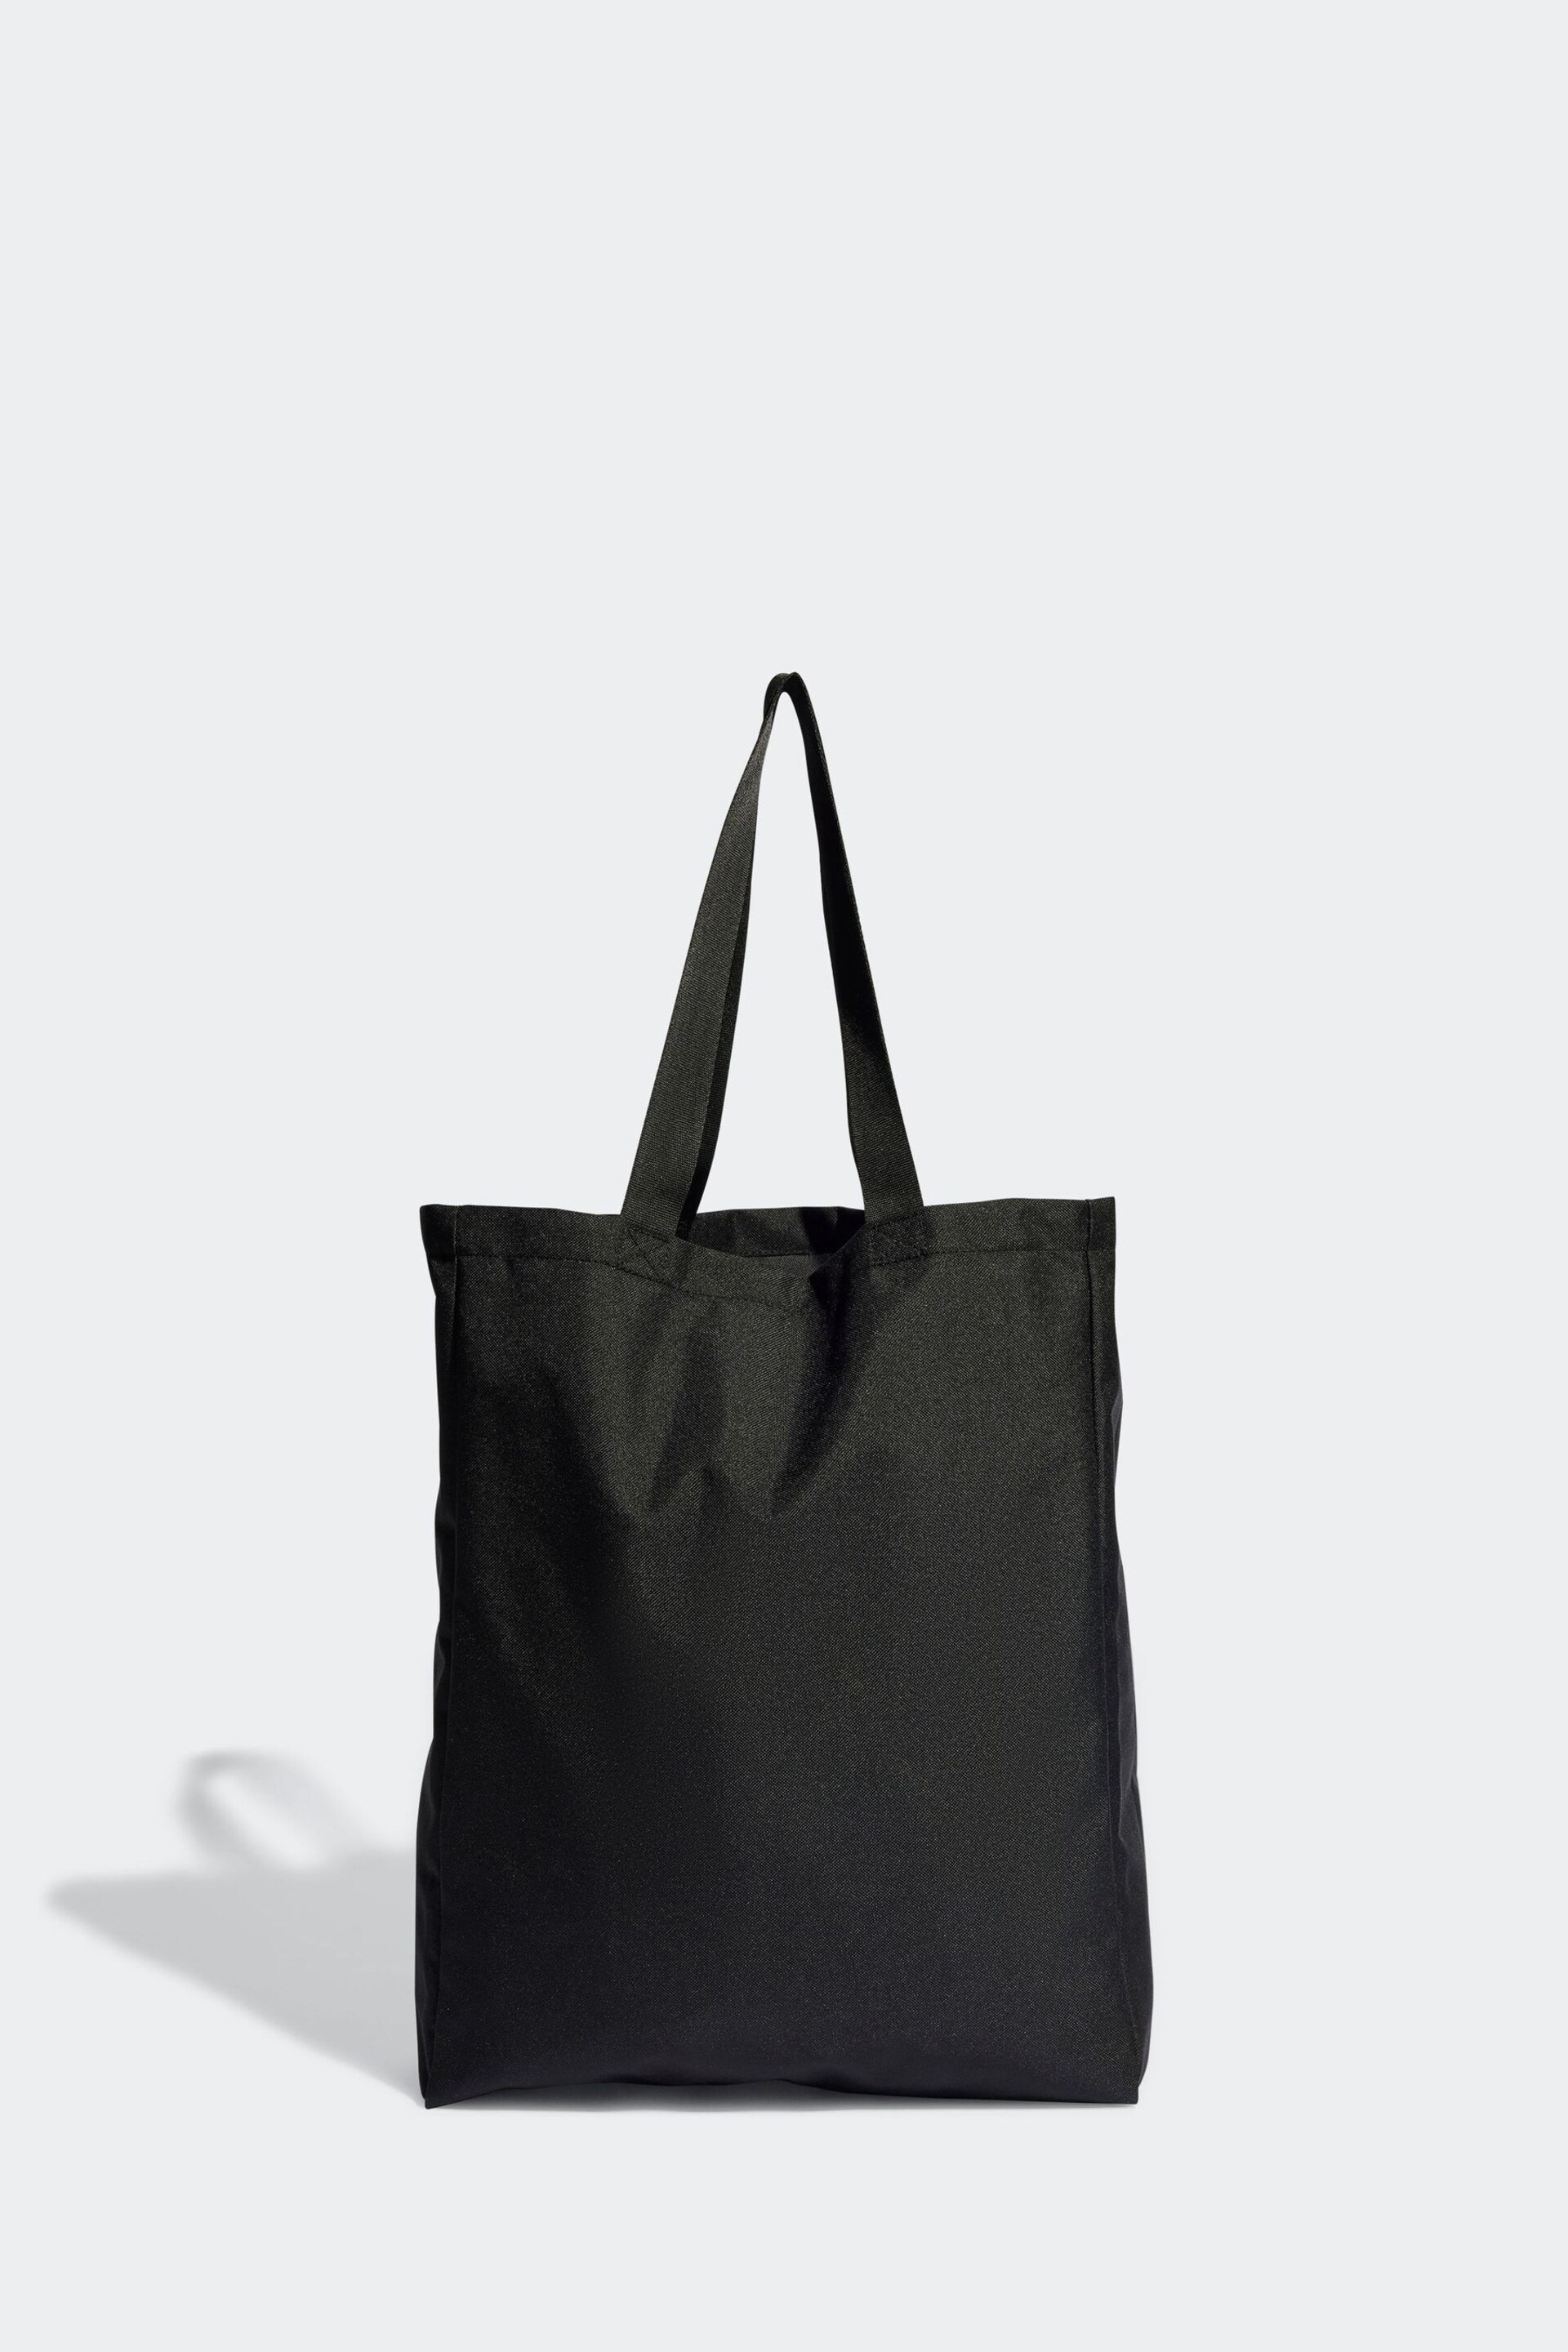 adidas Originals Adicolor Classic Shopper Black Bag - Image 3 of 6